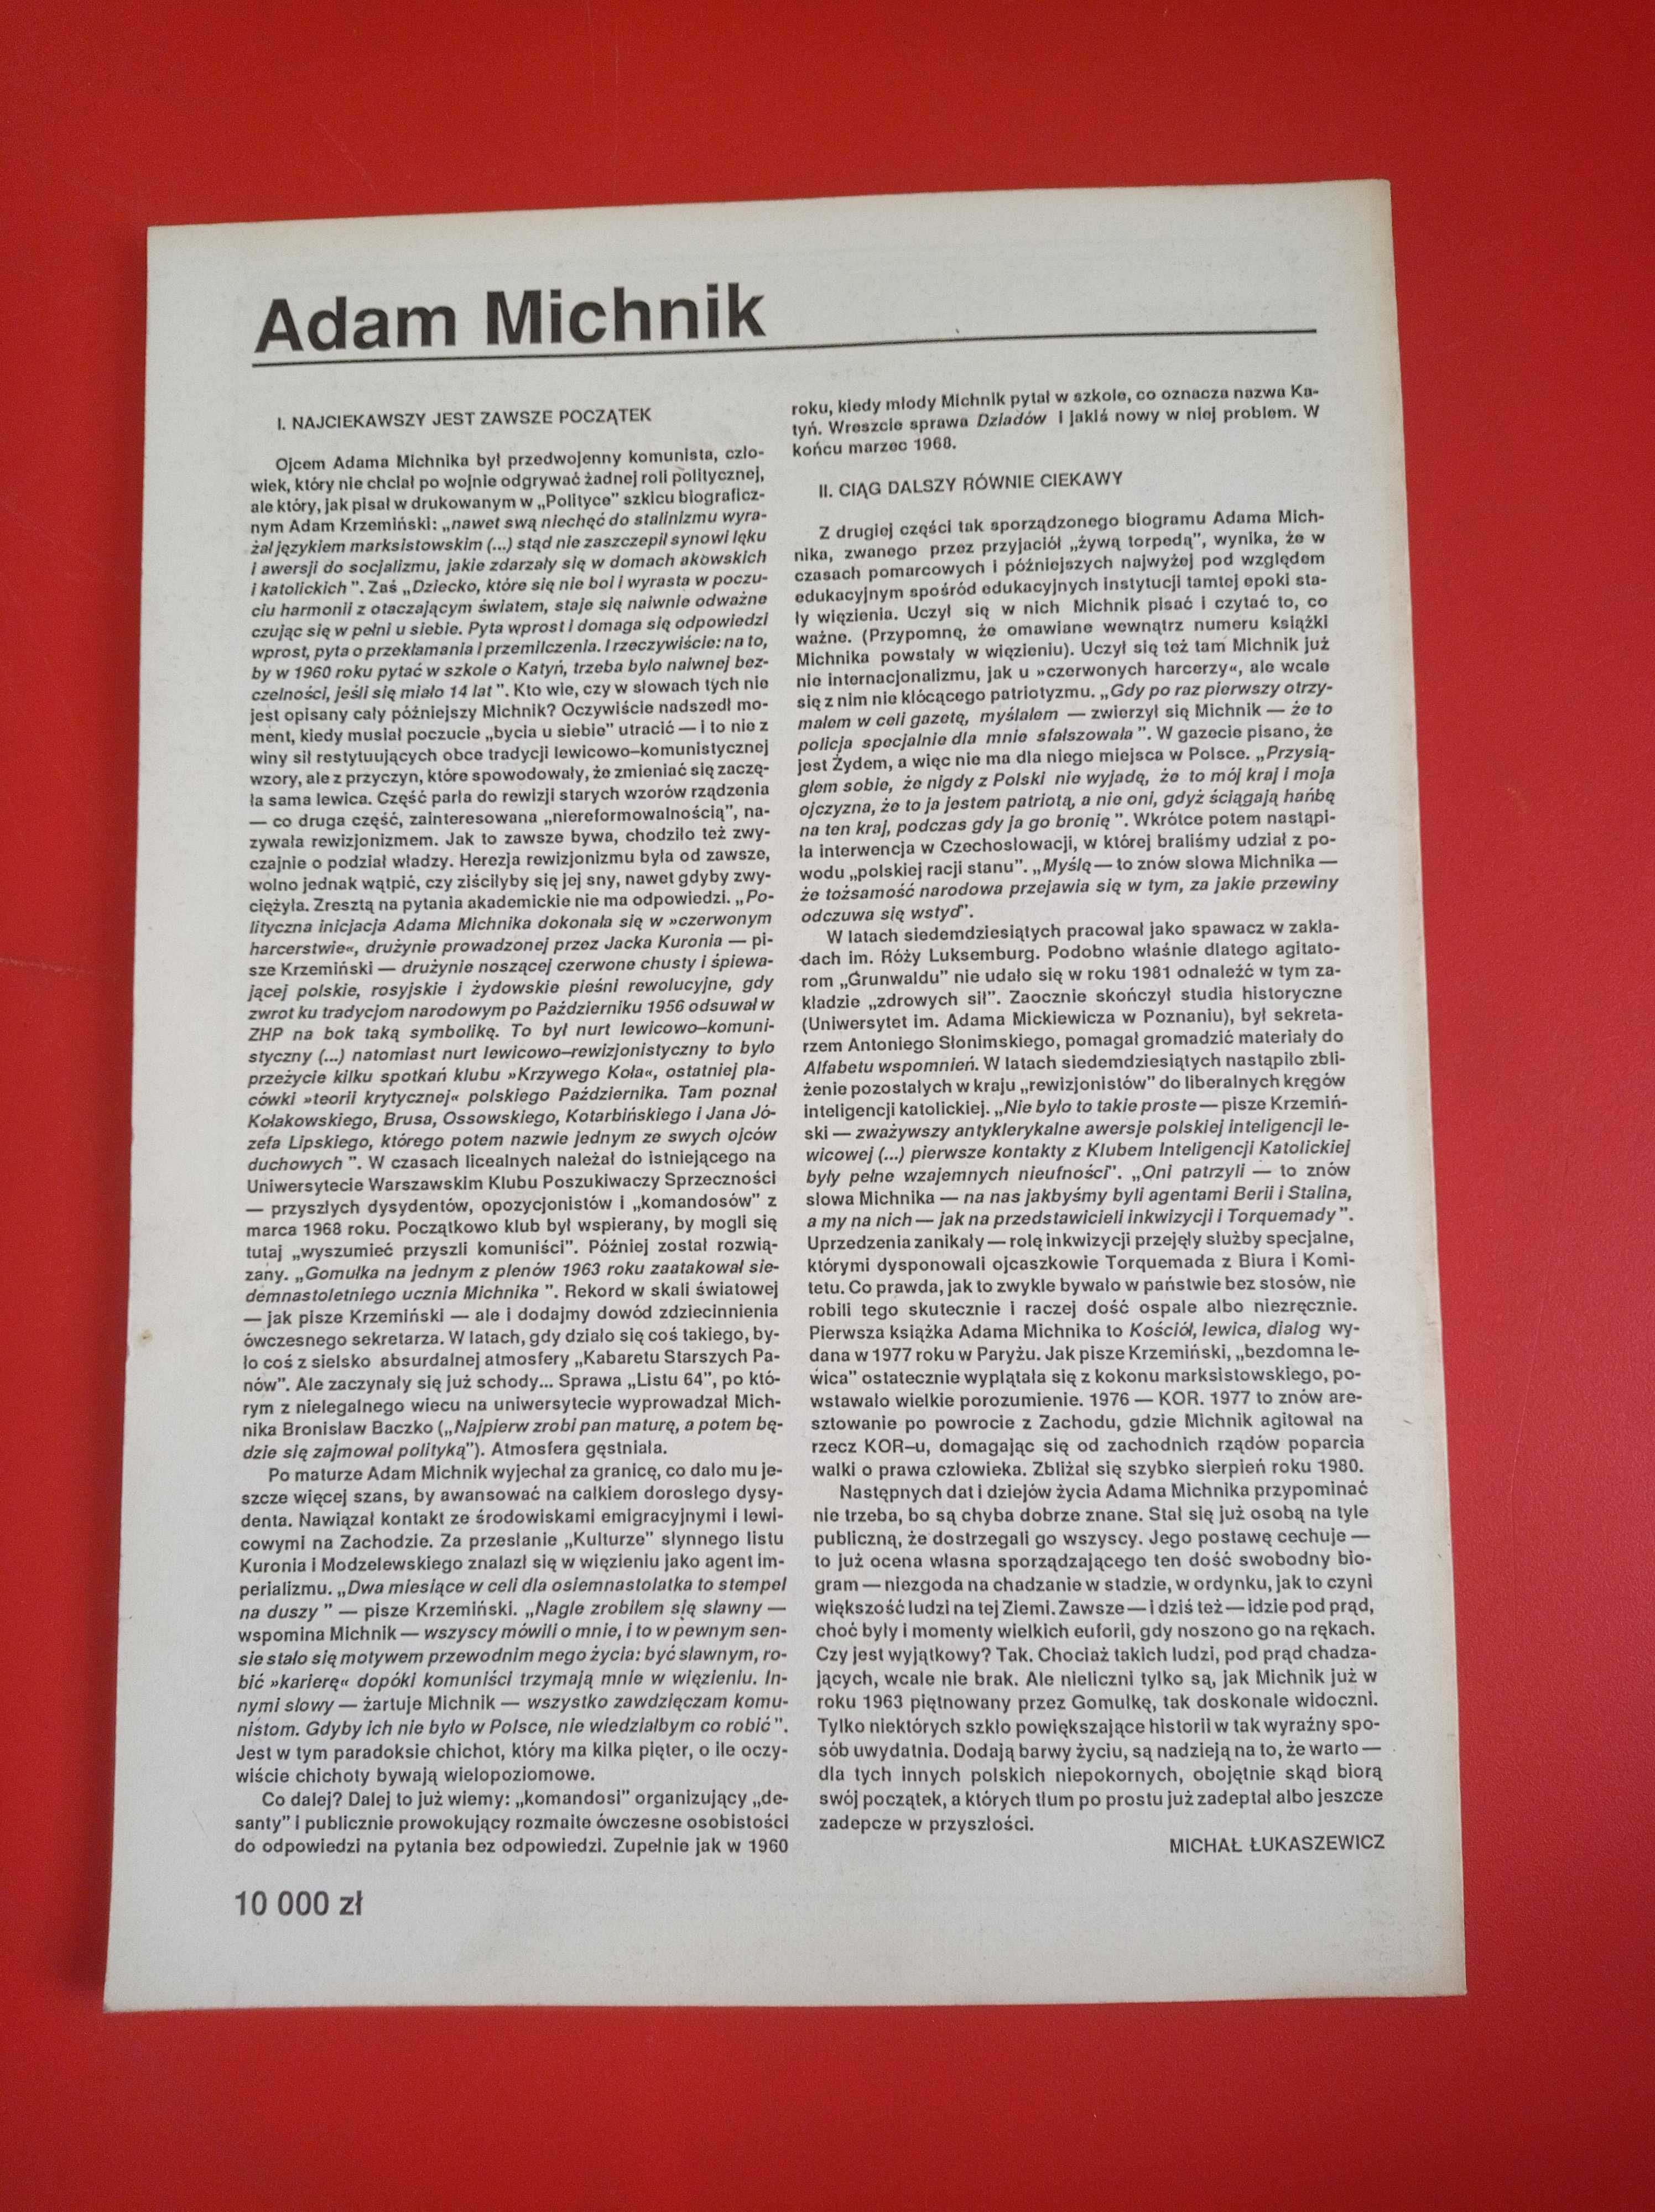 Nowe książki, nr 9, wrzesień 1991, Adam Michnik